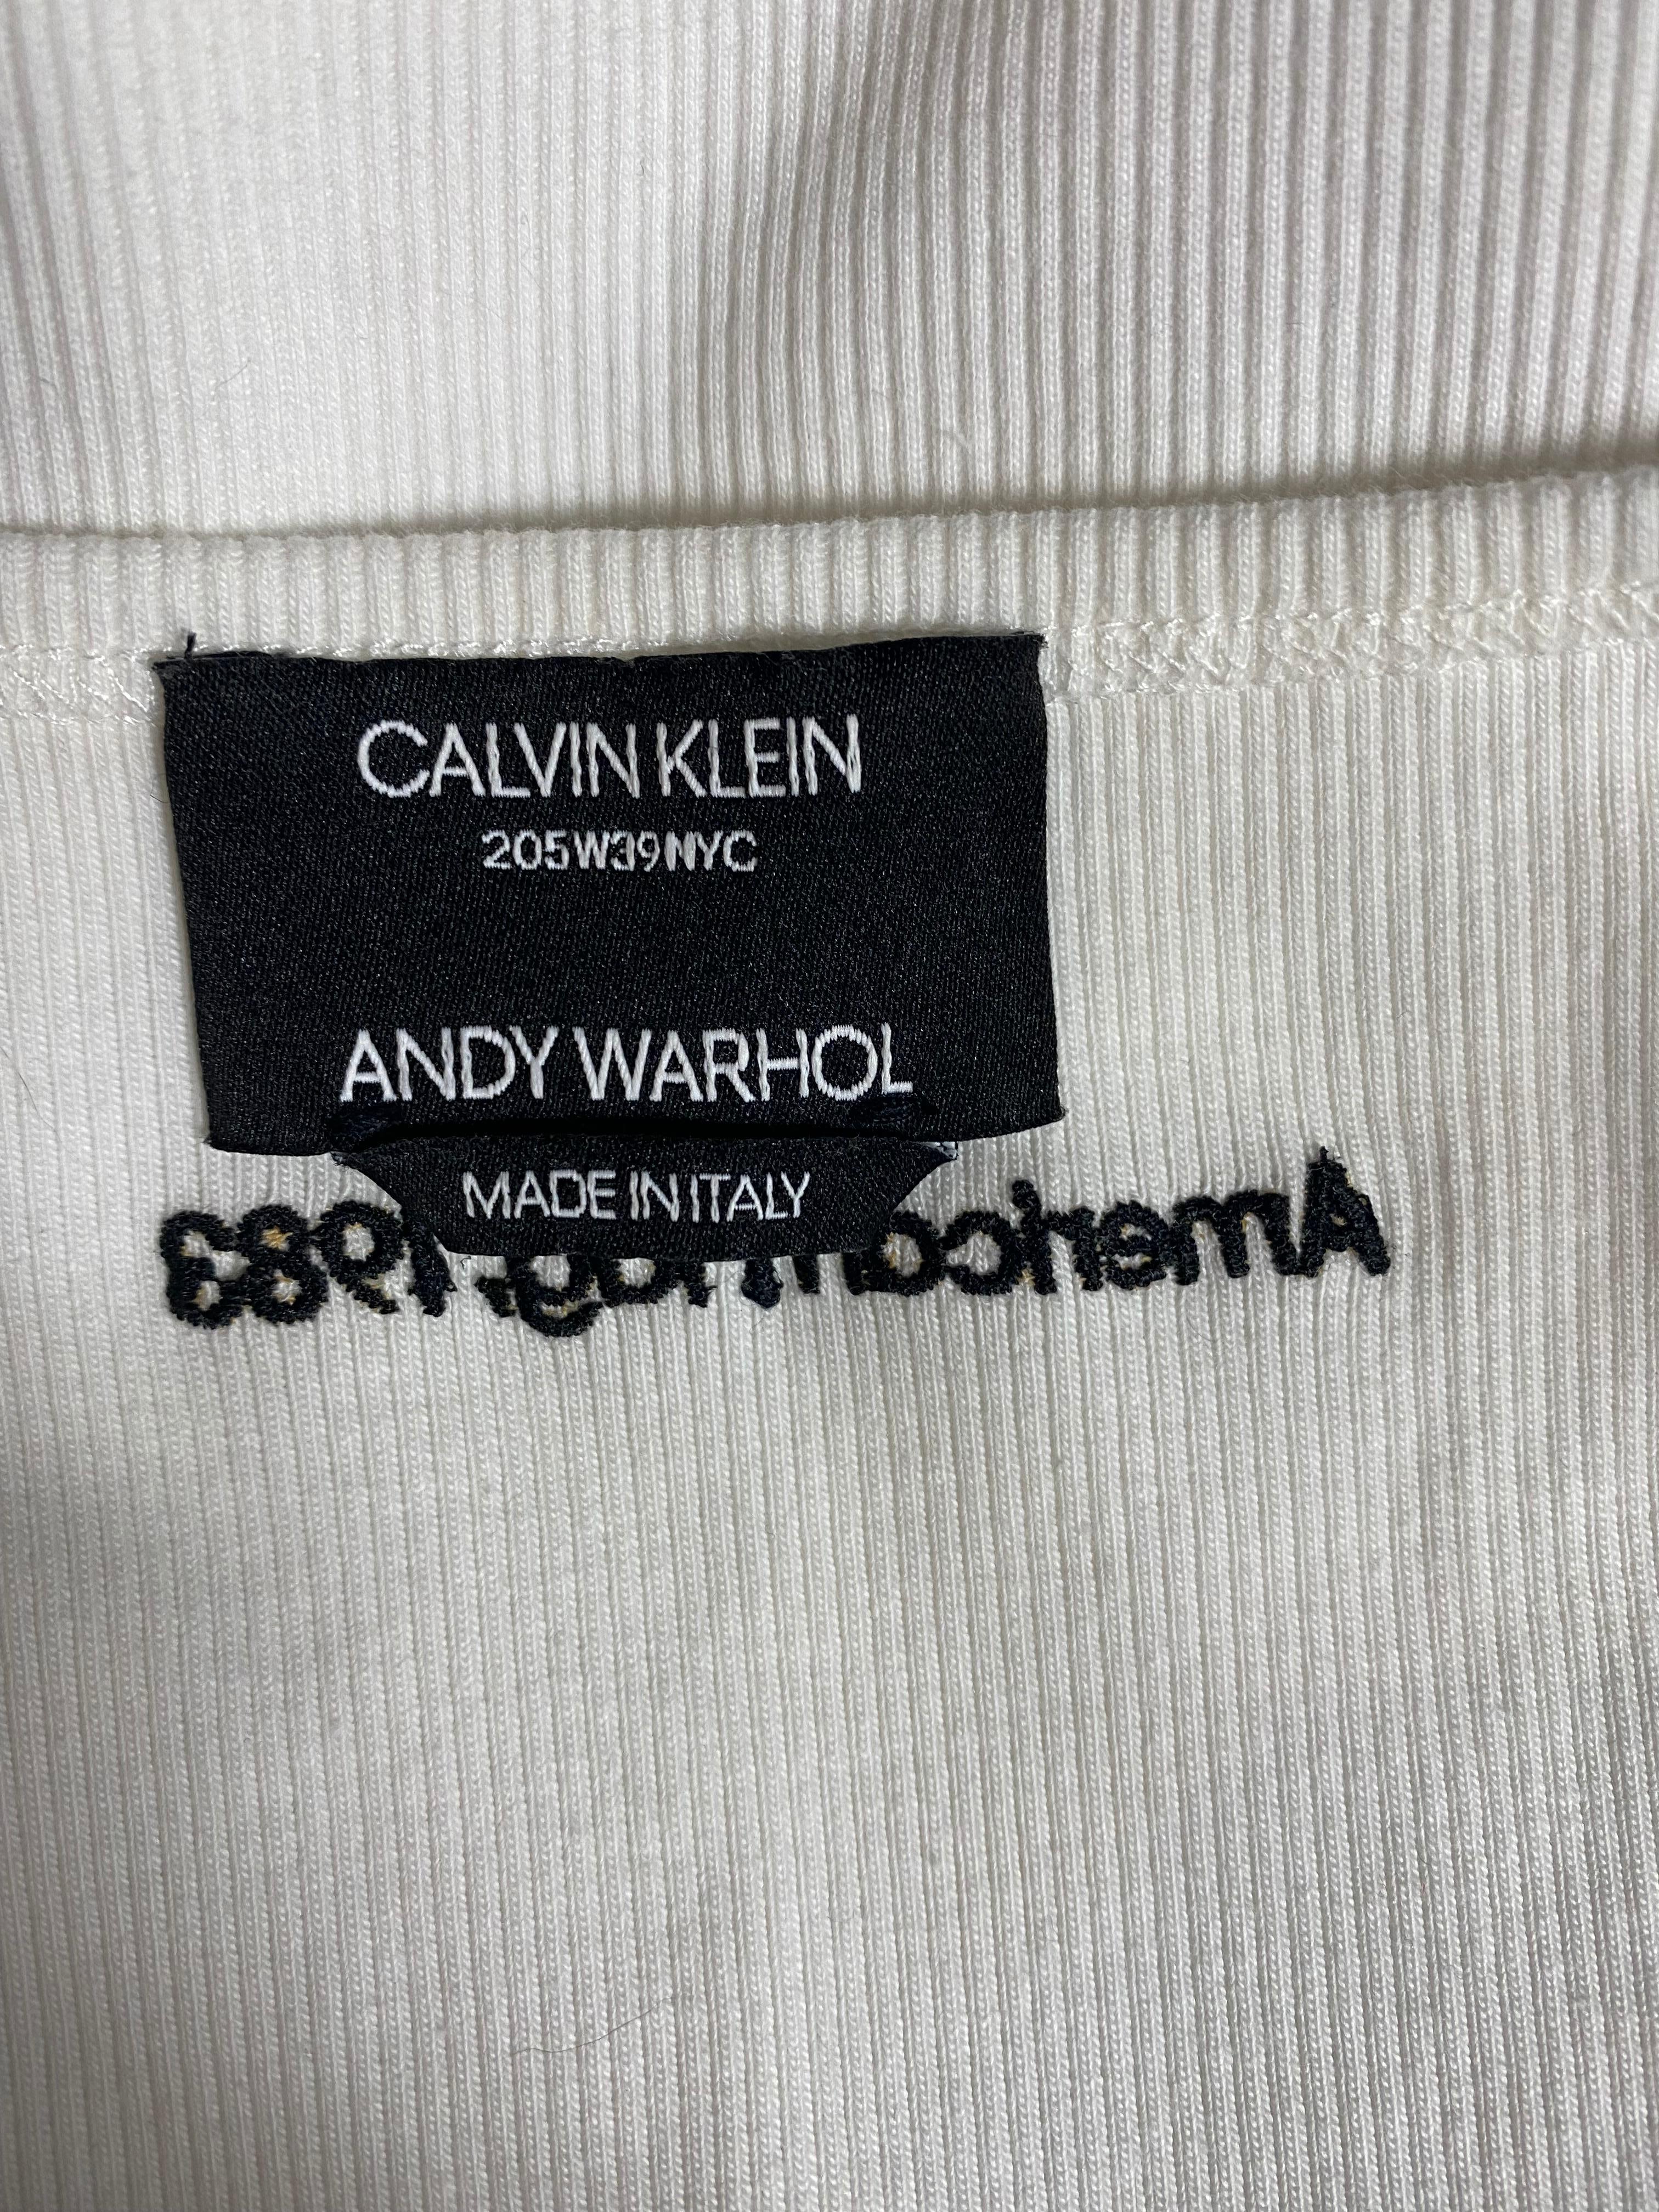 Débardeur blanc Calvin Klein Andy Warhol, Taille Small Unisexe en vente